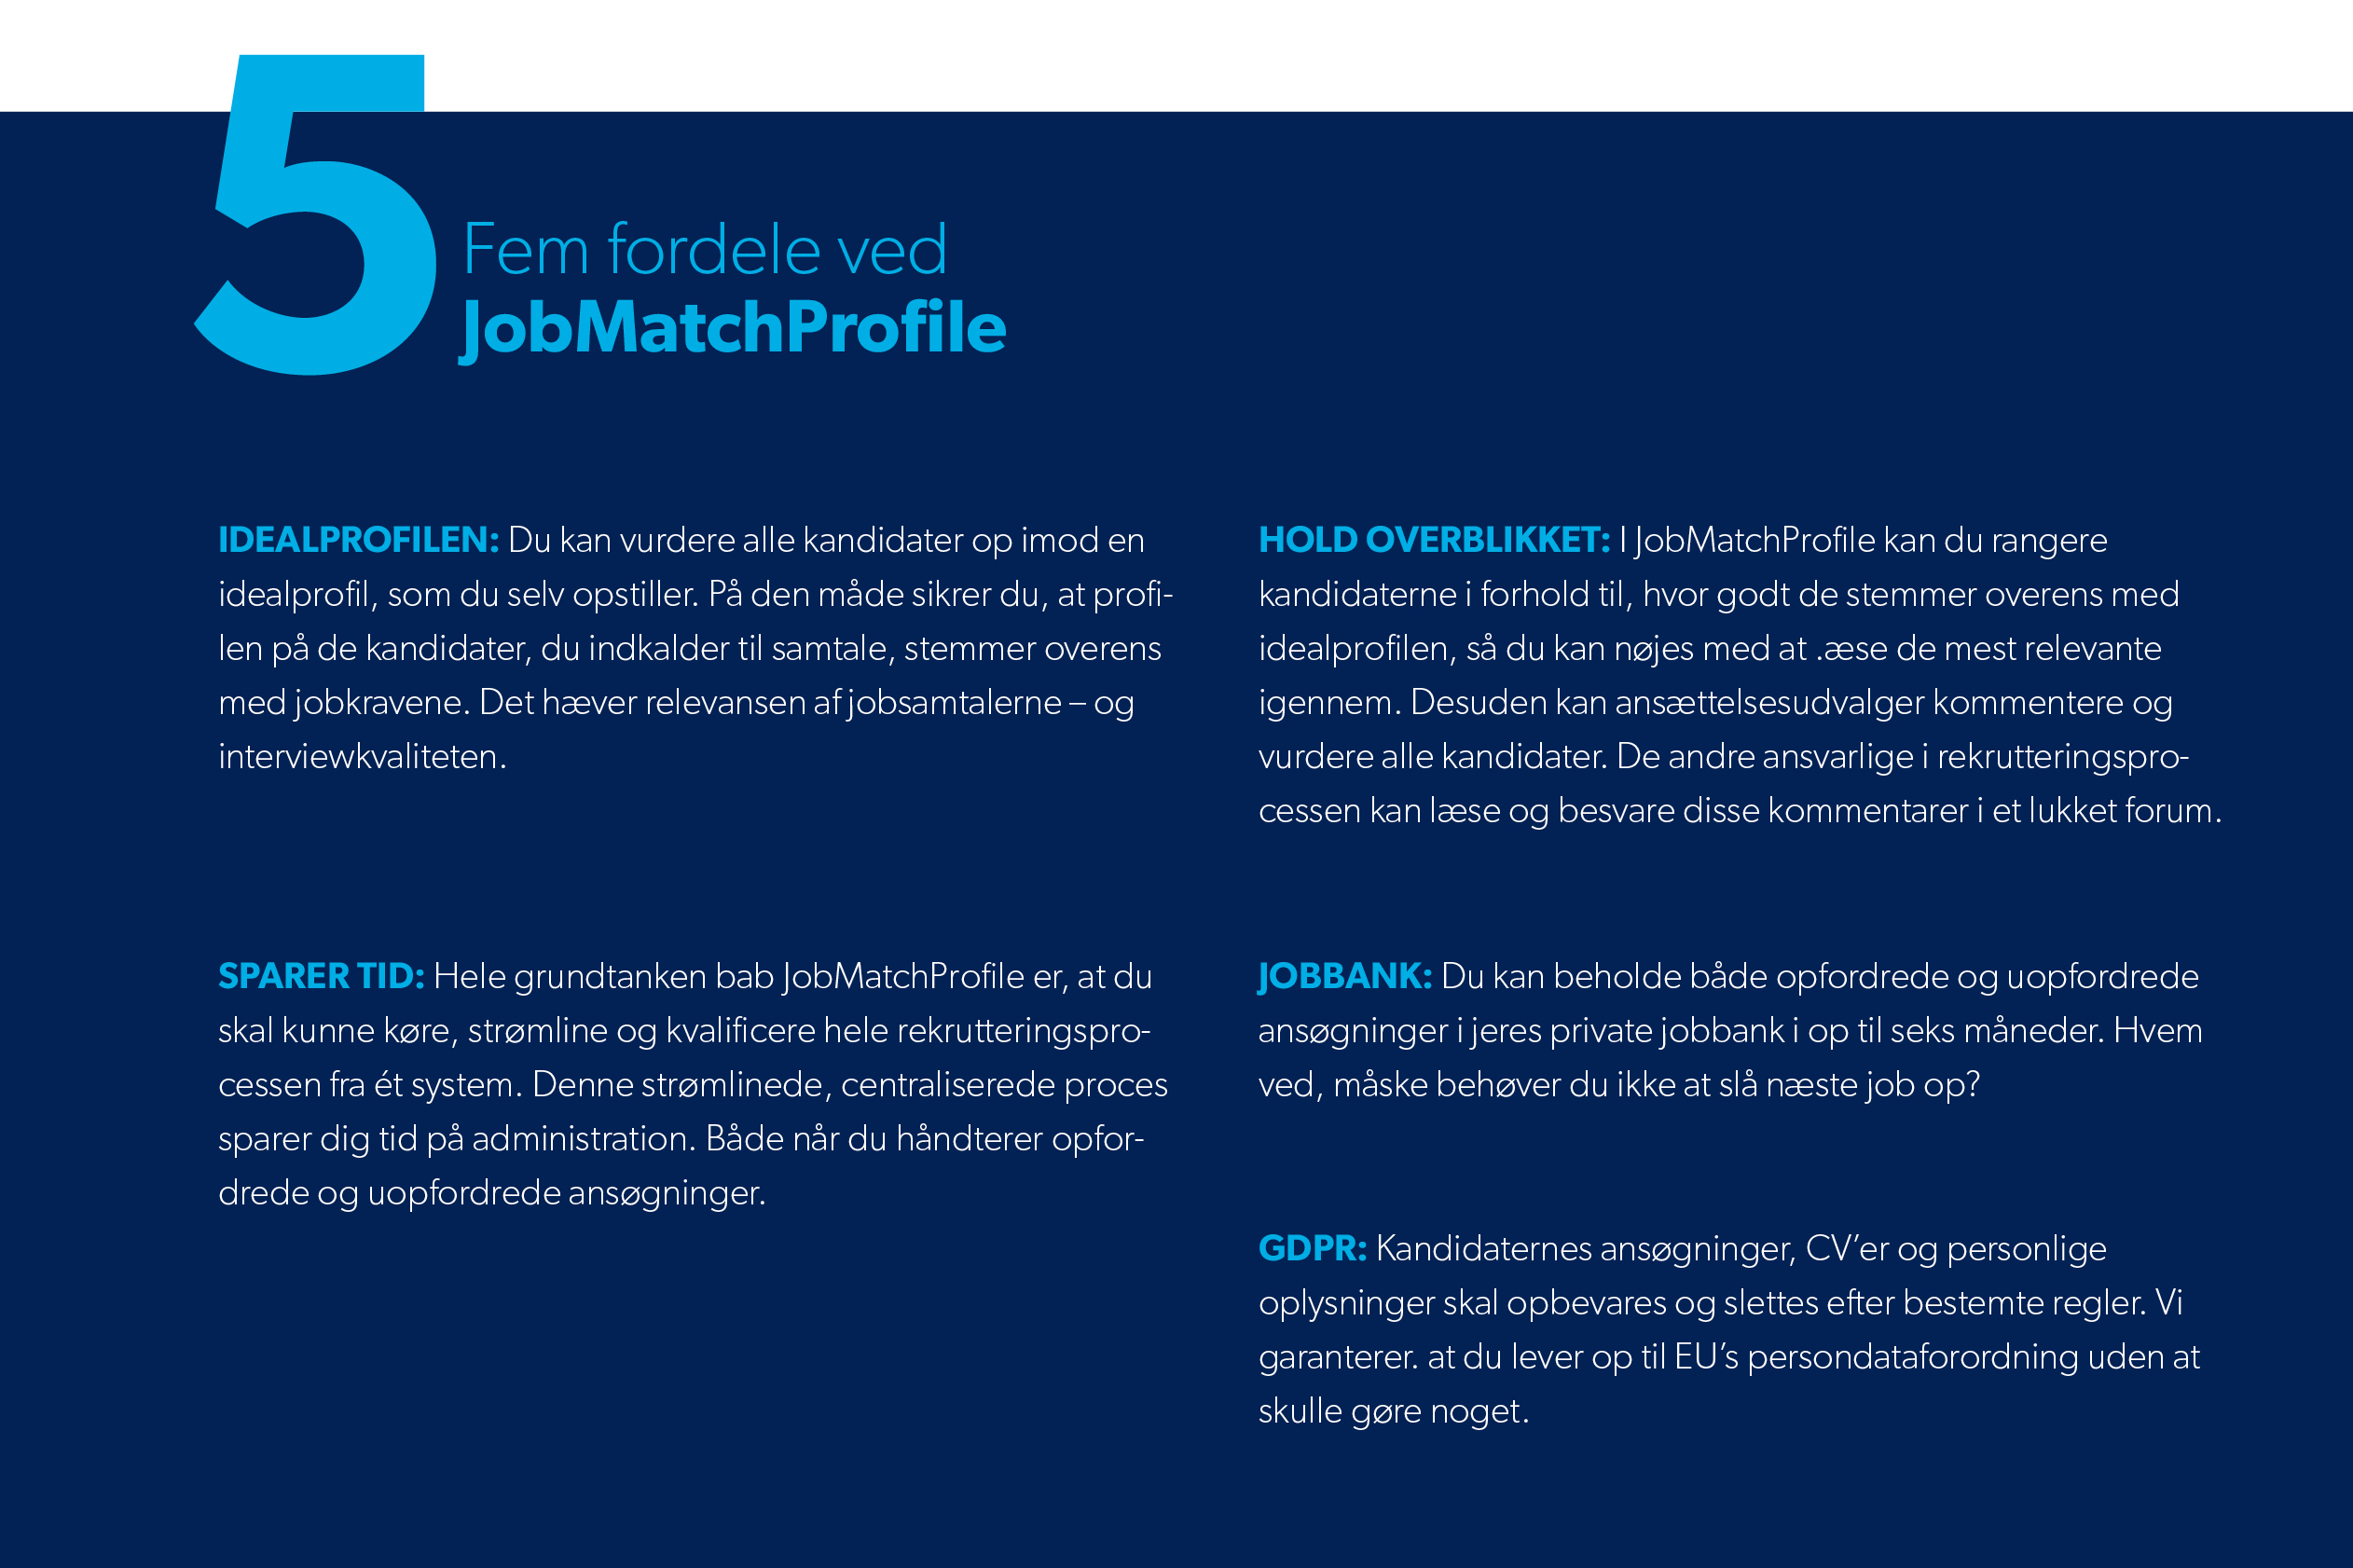 JobMatchProfile - rekrutteringssystem fra Garuda